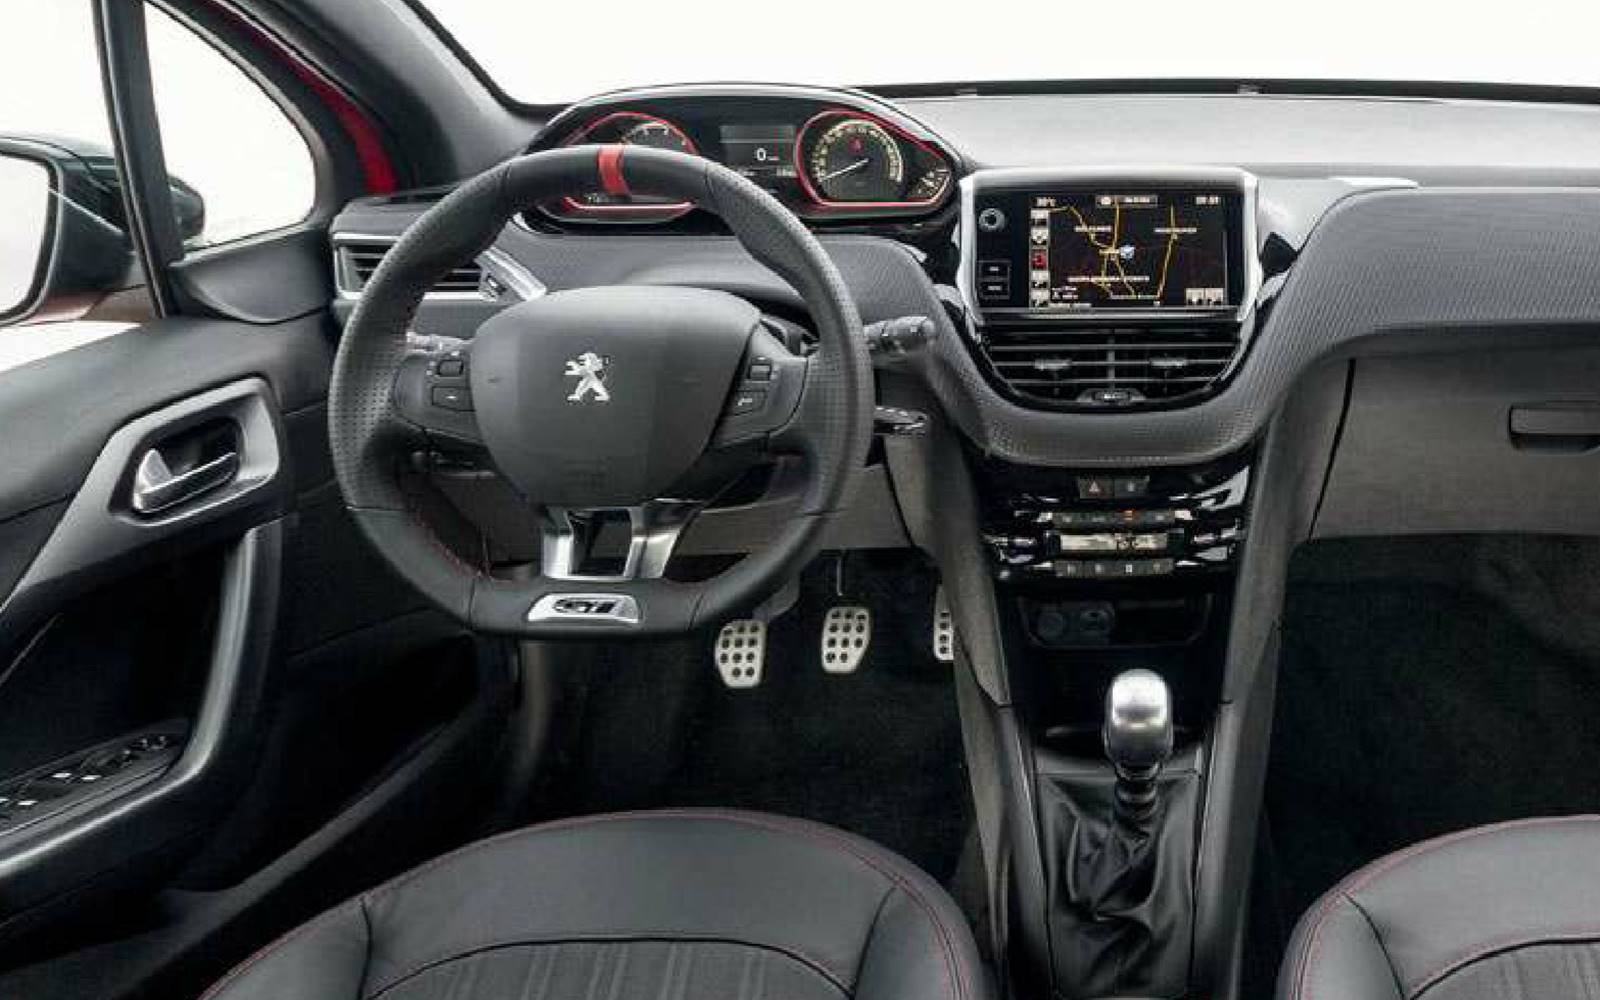 2017 208. Peugeot 208 gt Interior. Peugeot 208 салон. Peugeot 208 интерьер. Peugeot 208 2017.